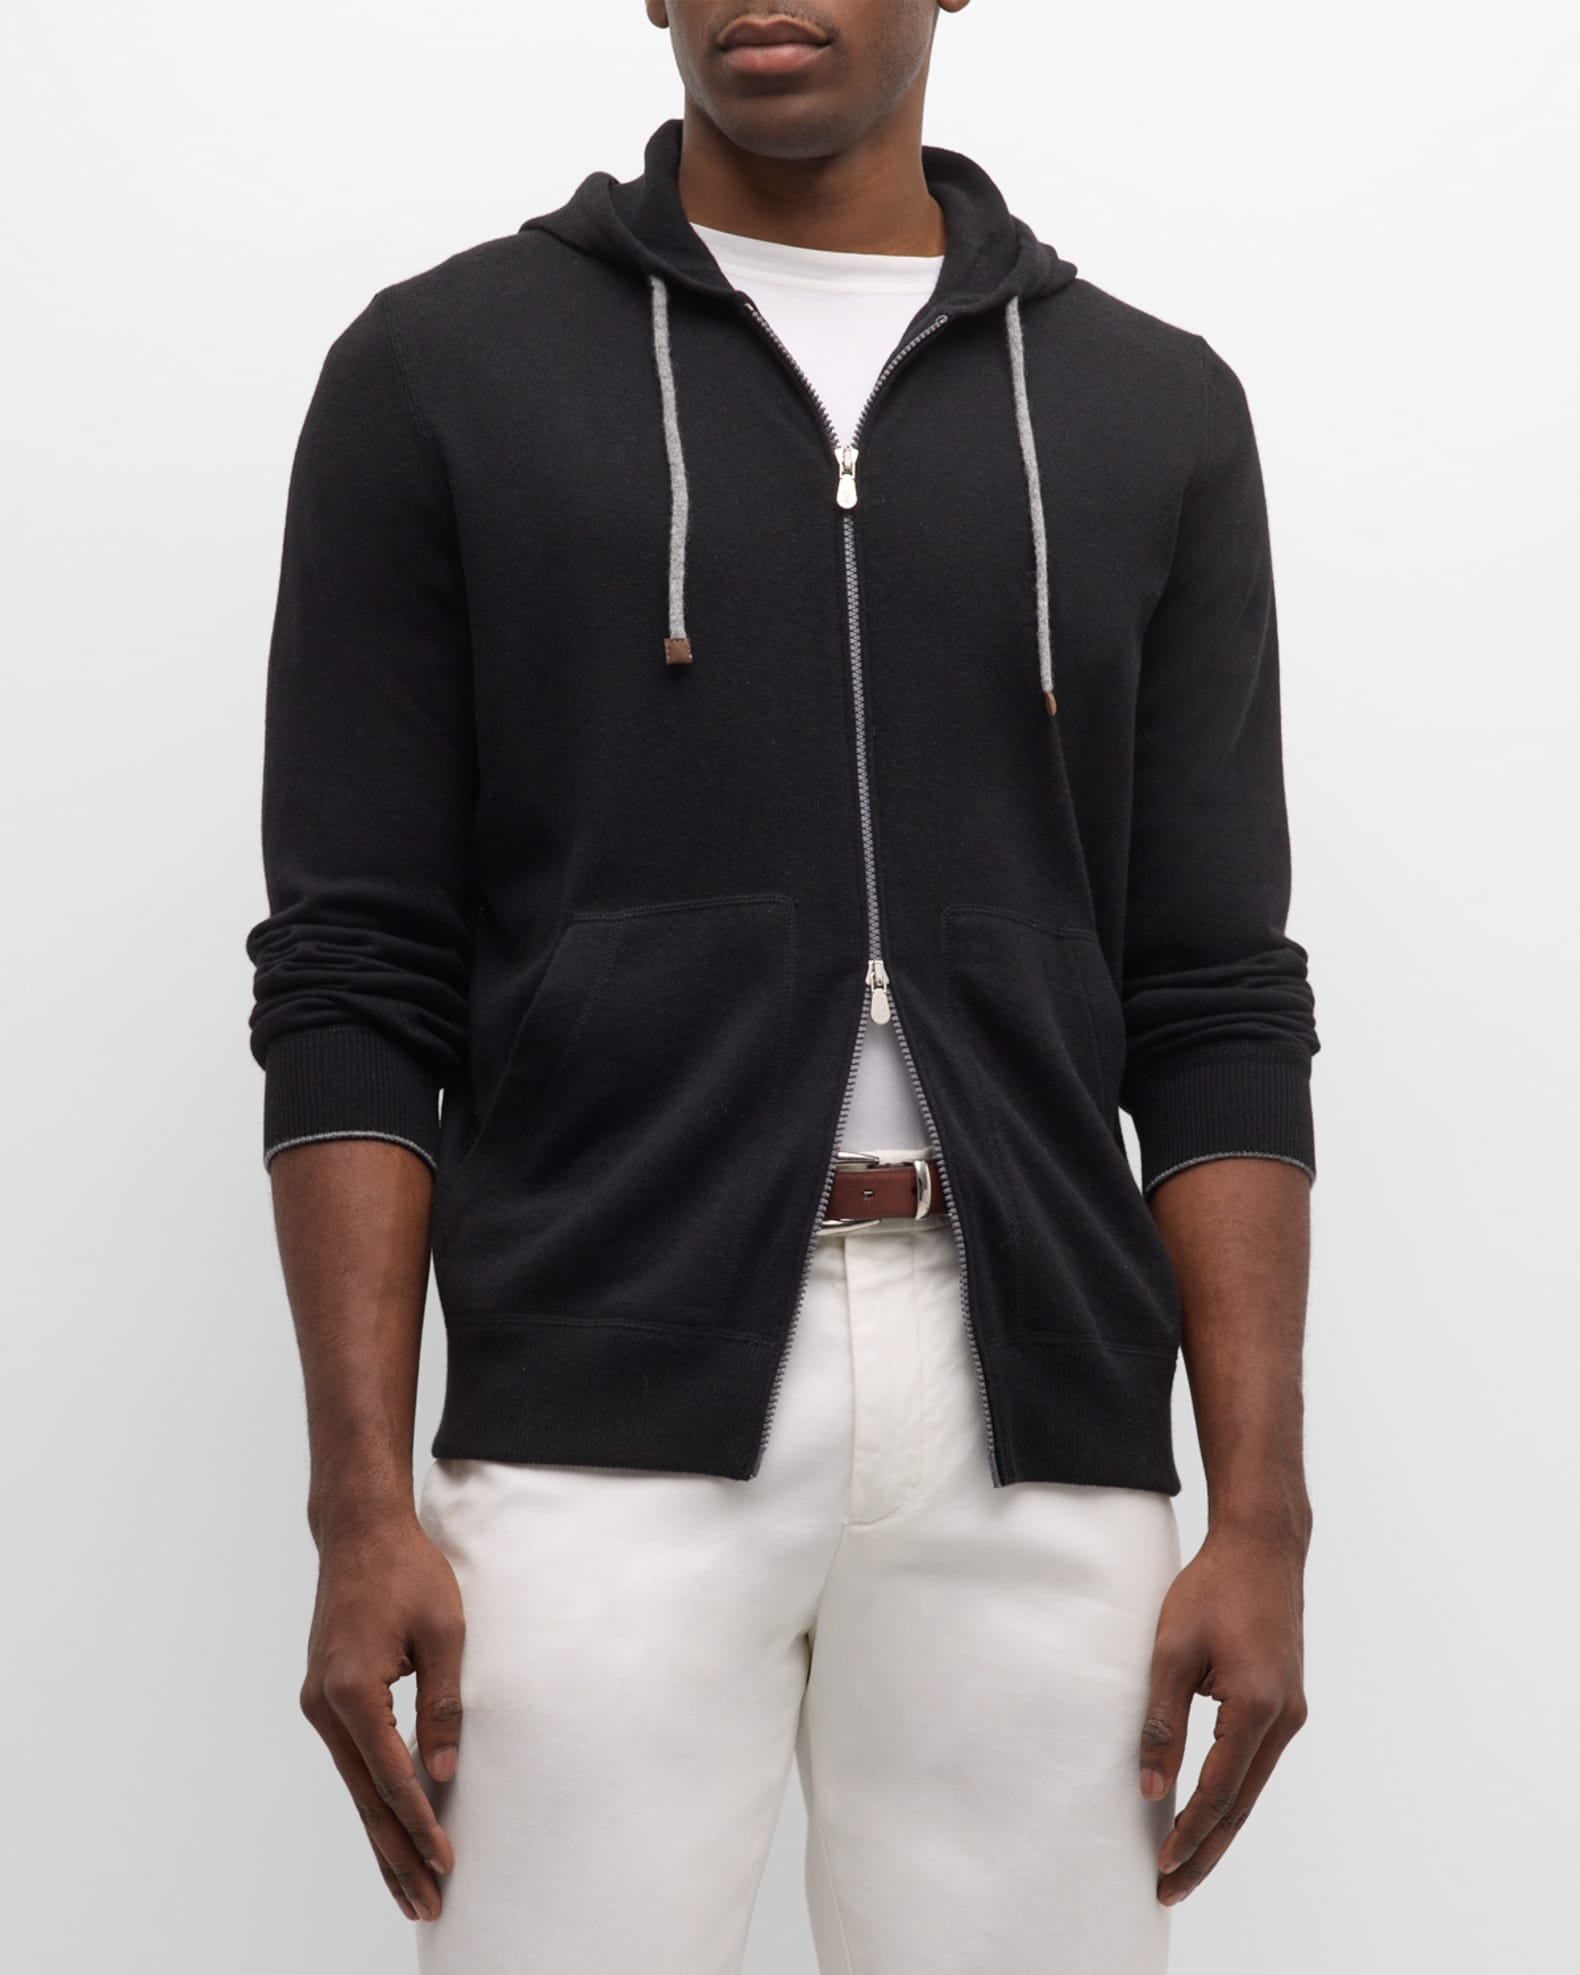 Ferragamo hooded cashmere jacket - Neutrals